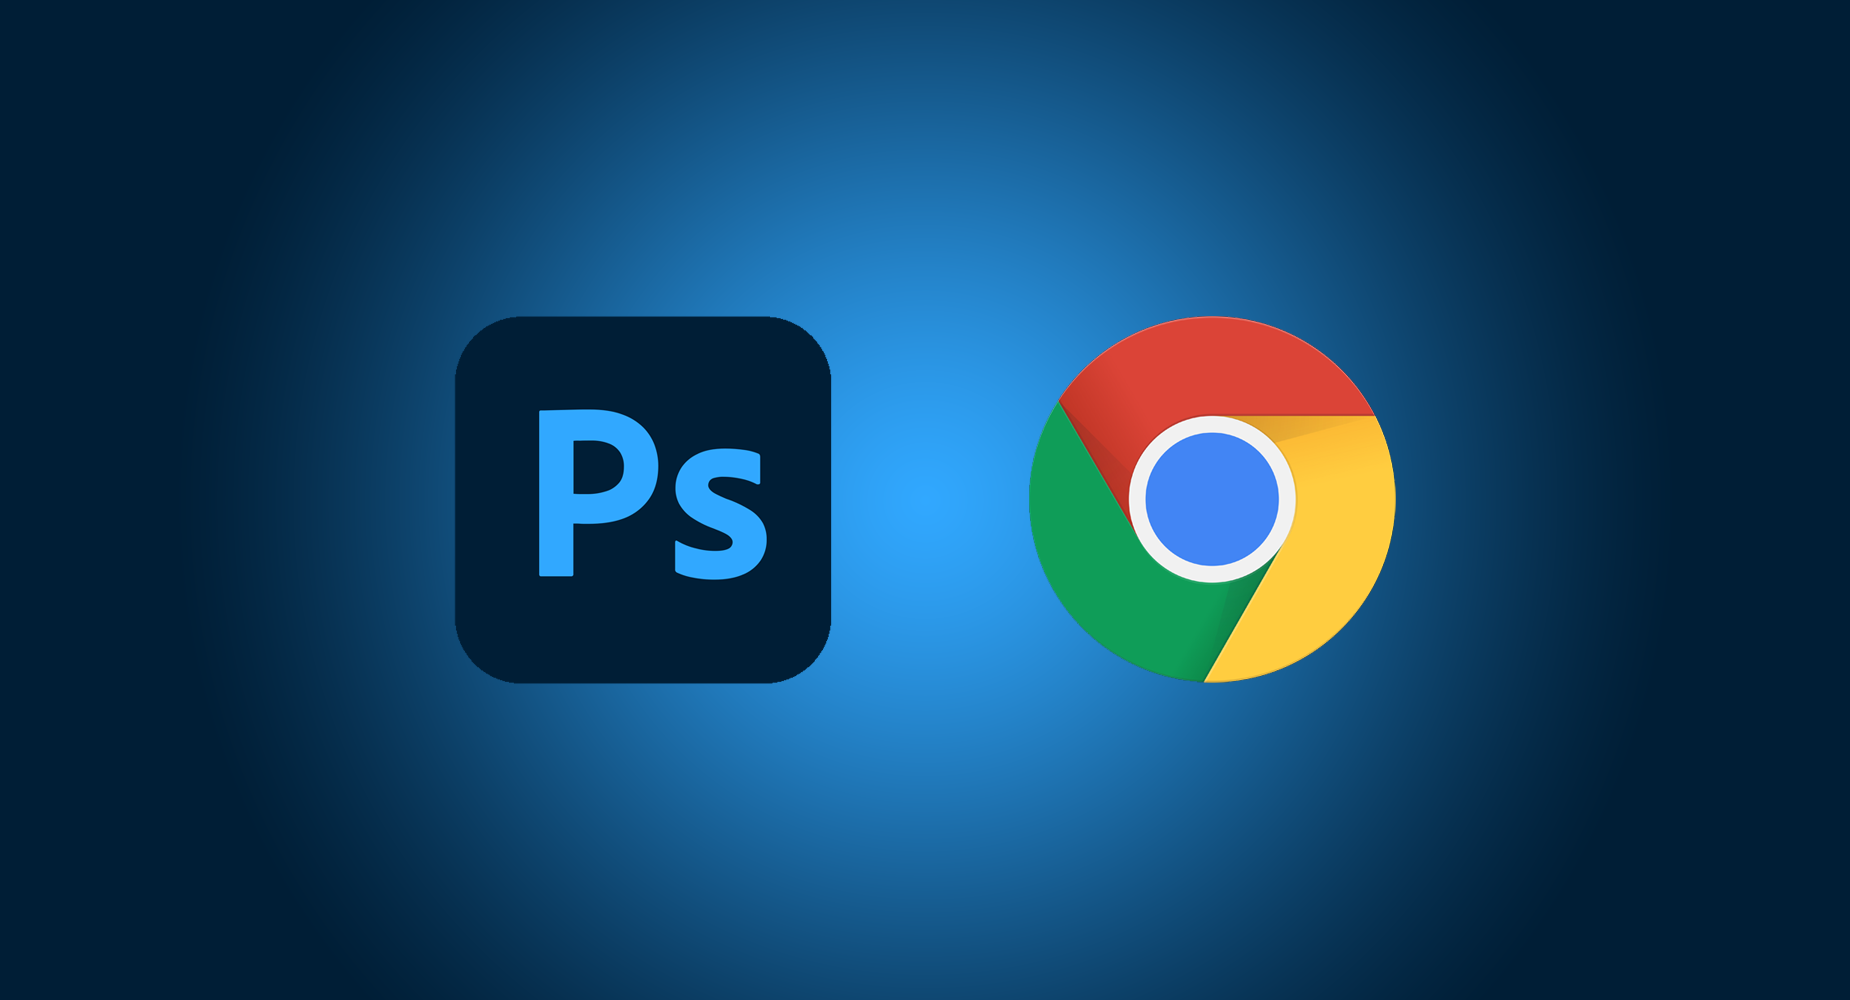 Photoshop logo showing next to Chrome logo with blue background